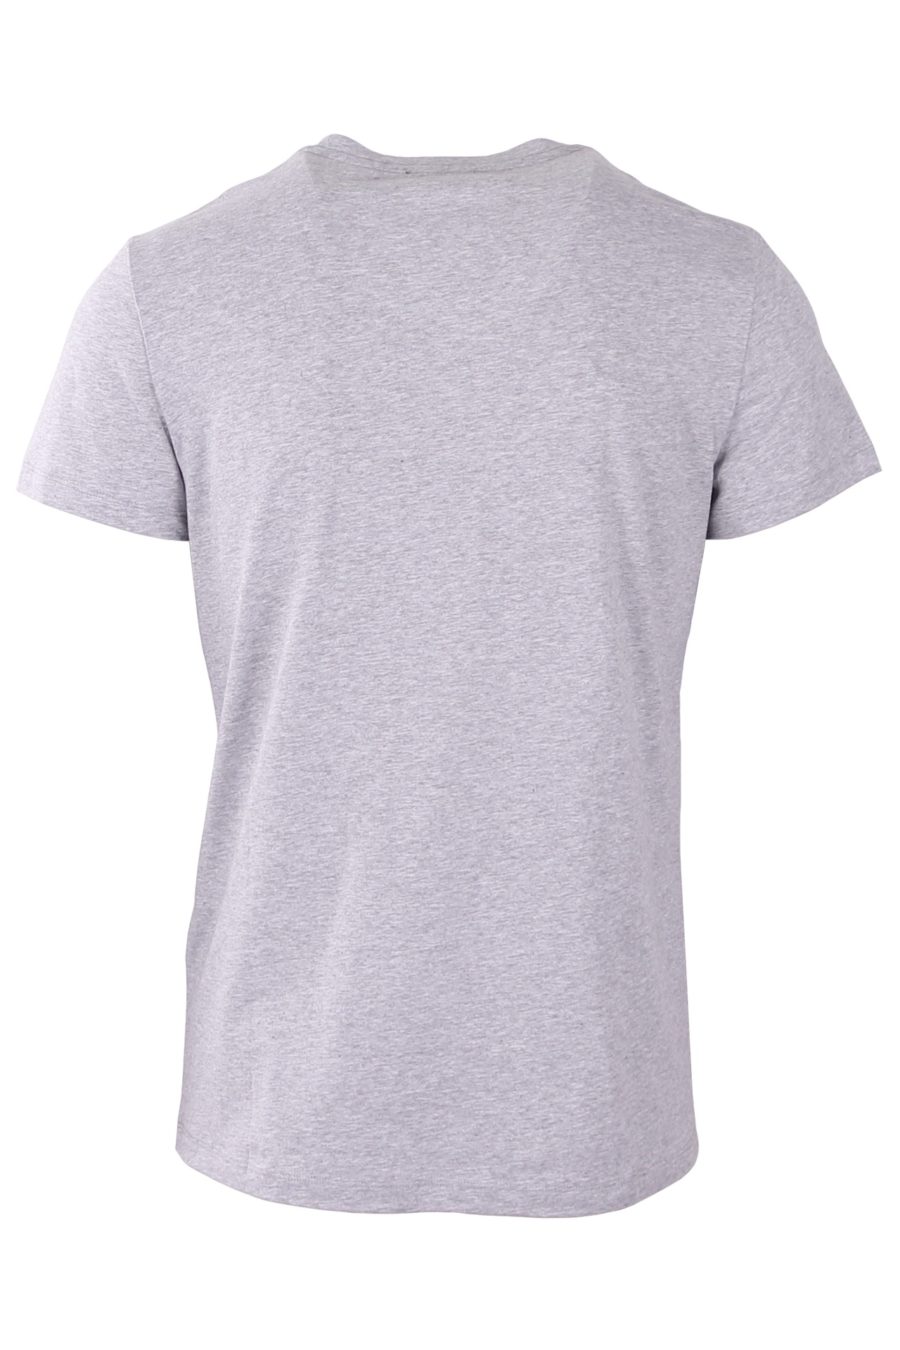 Balmain T-shirt cinzenta com logótipo em malha polar - ec078ff1465138a370c940d82461619a2f355cbd